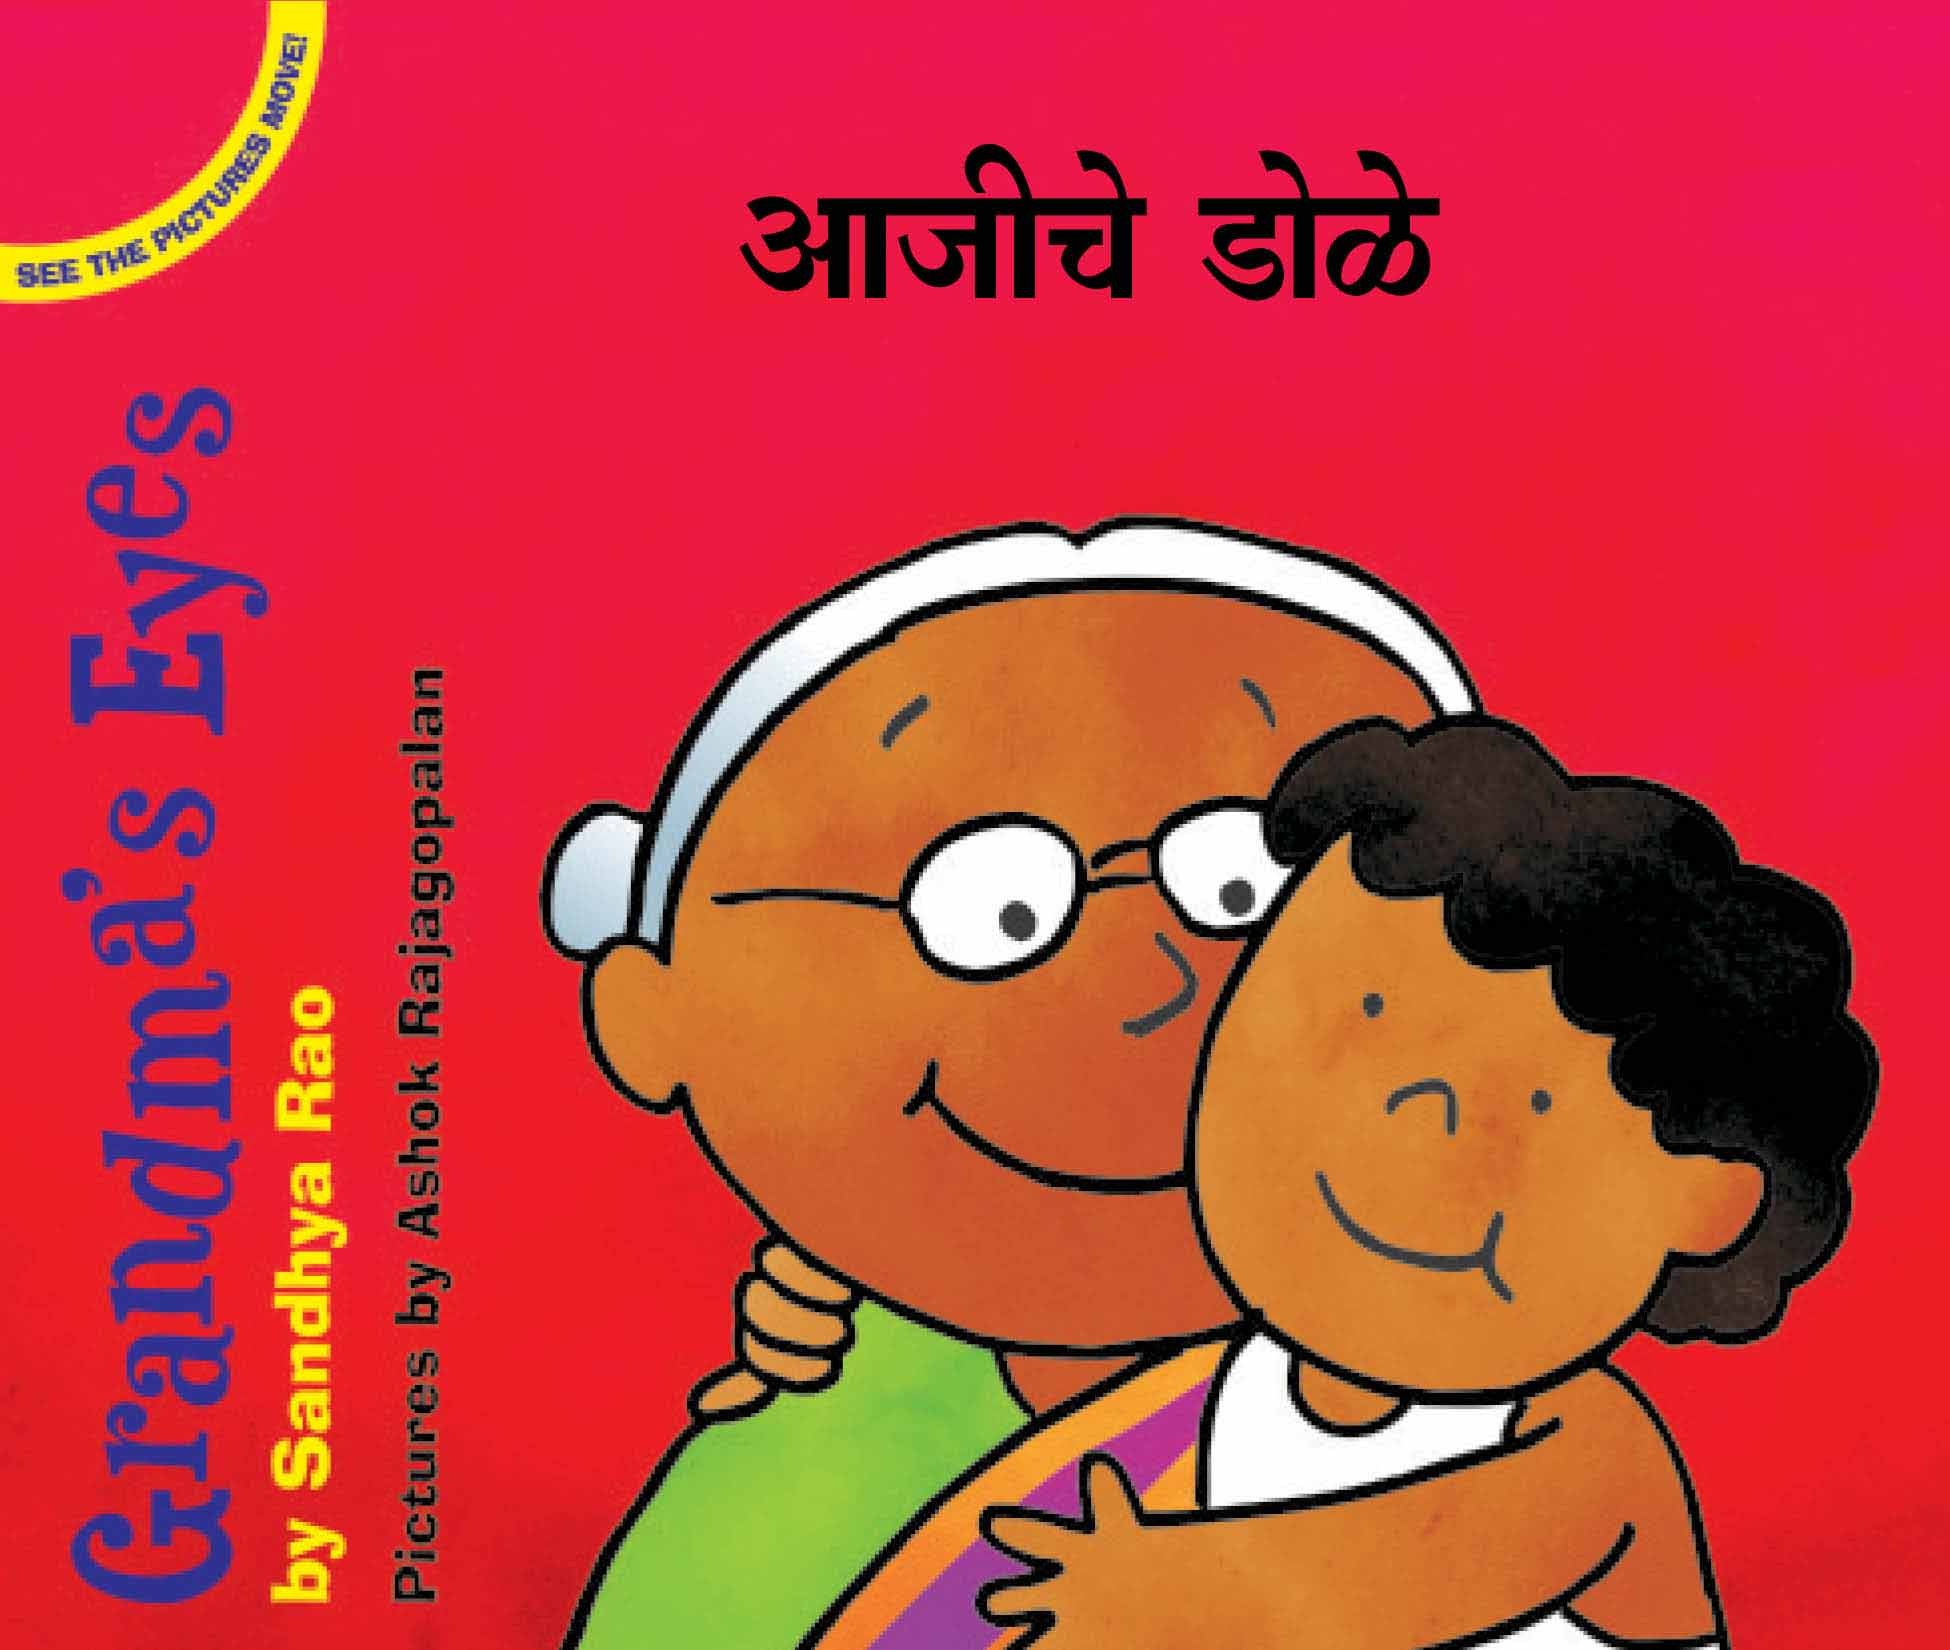 Grandma's Eyes/Aajichey Doley (English-Marathi)